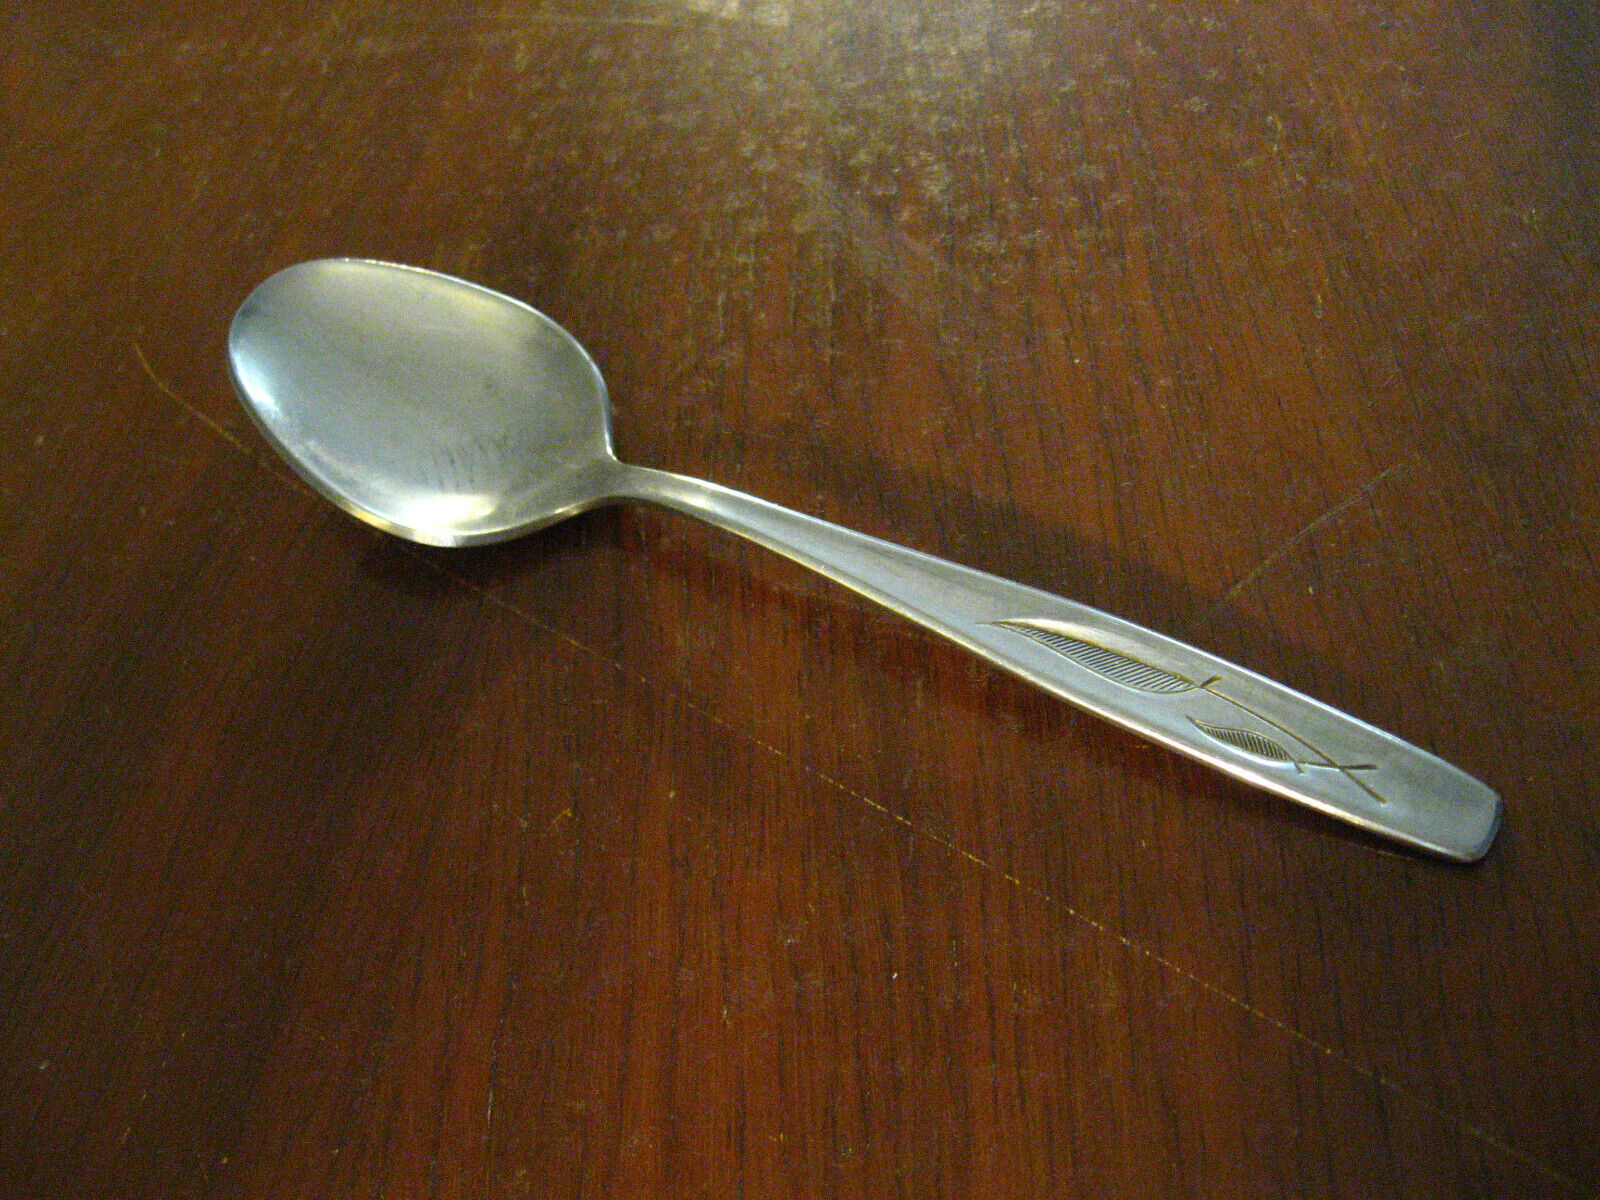 Rogers Cutlery Whispering Leaves Teaspoon - Vintage Mid Century Stainless Spoon